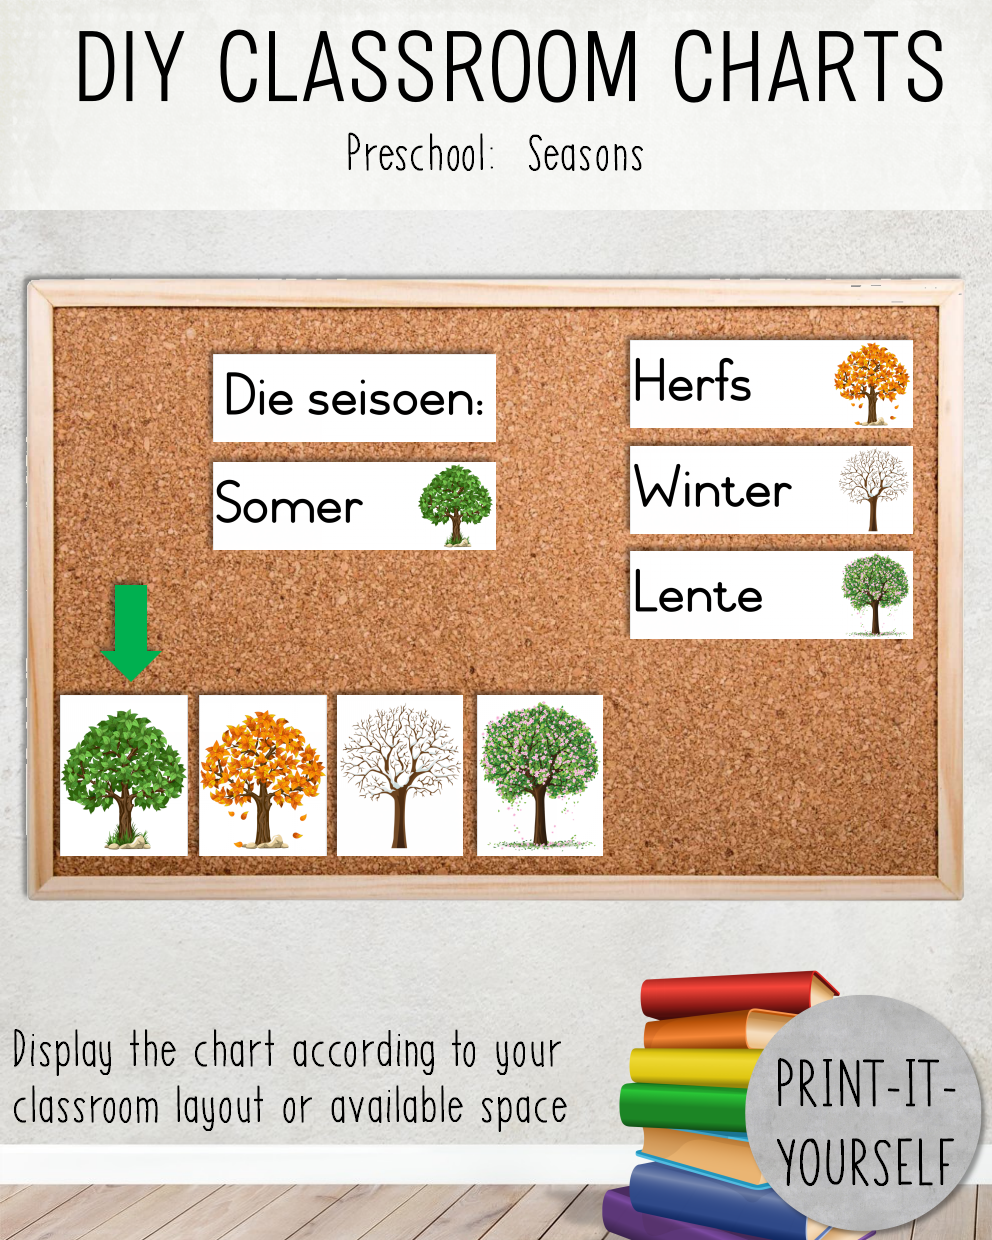 DIY CLASSROOM CHARTS BUNDLE:  Preschool Set - Weather, Calendar, Seasons, Emotions